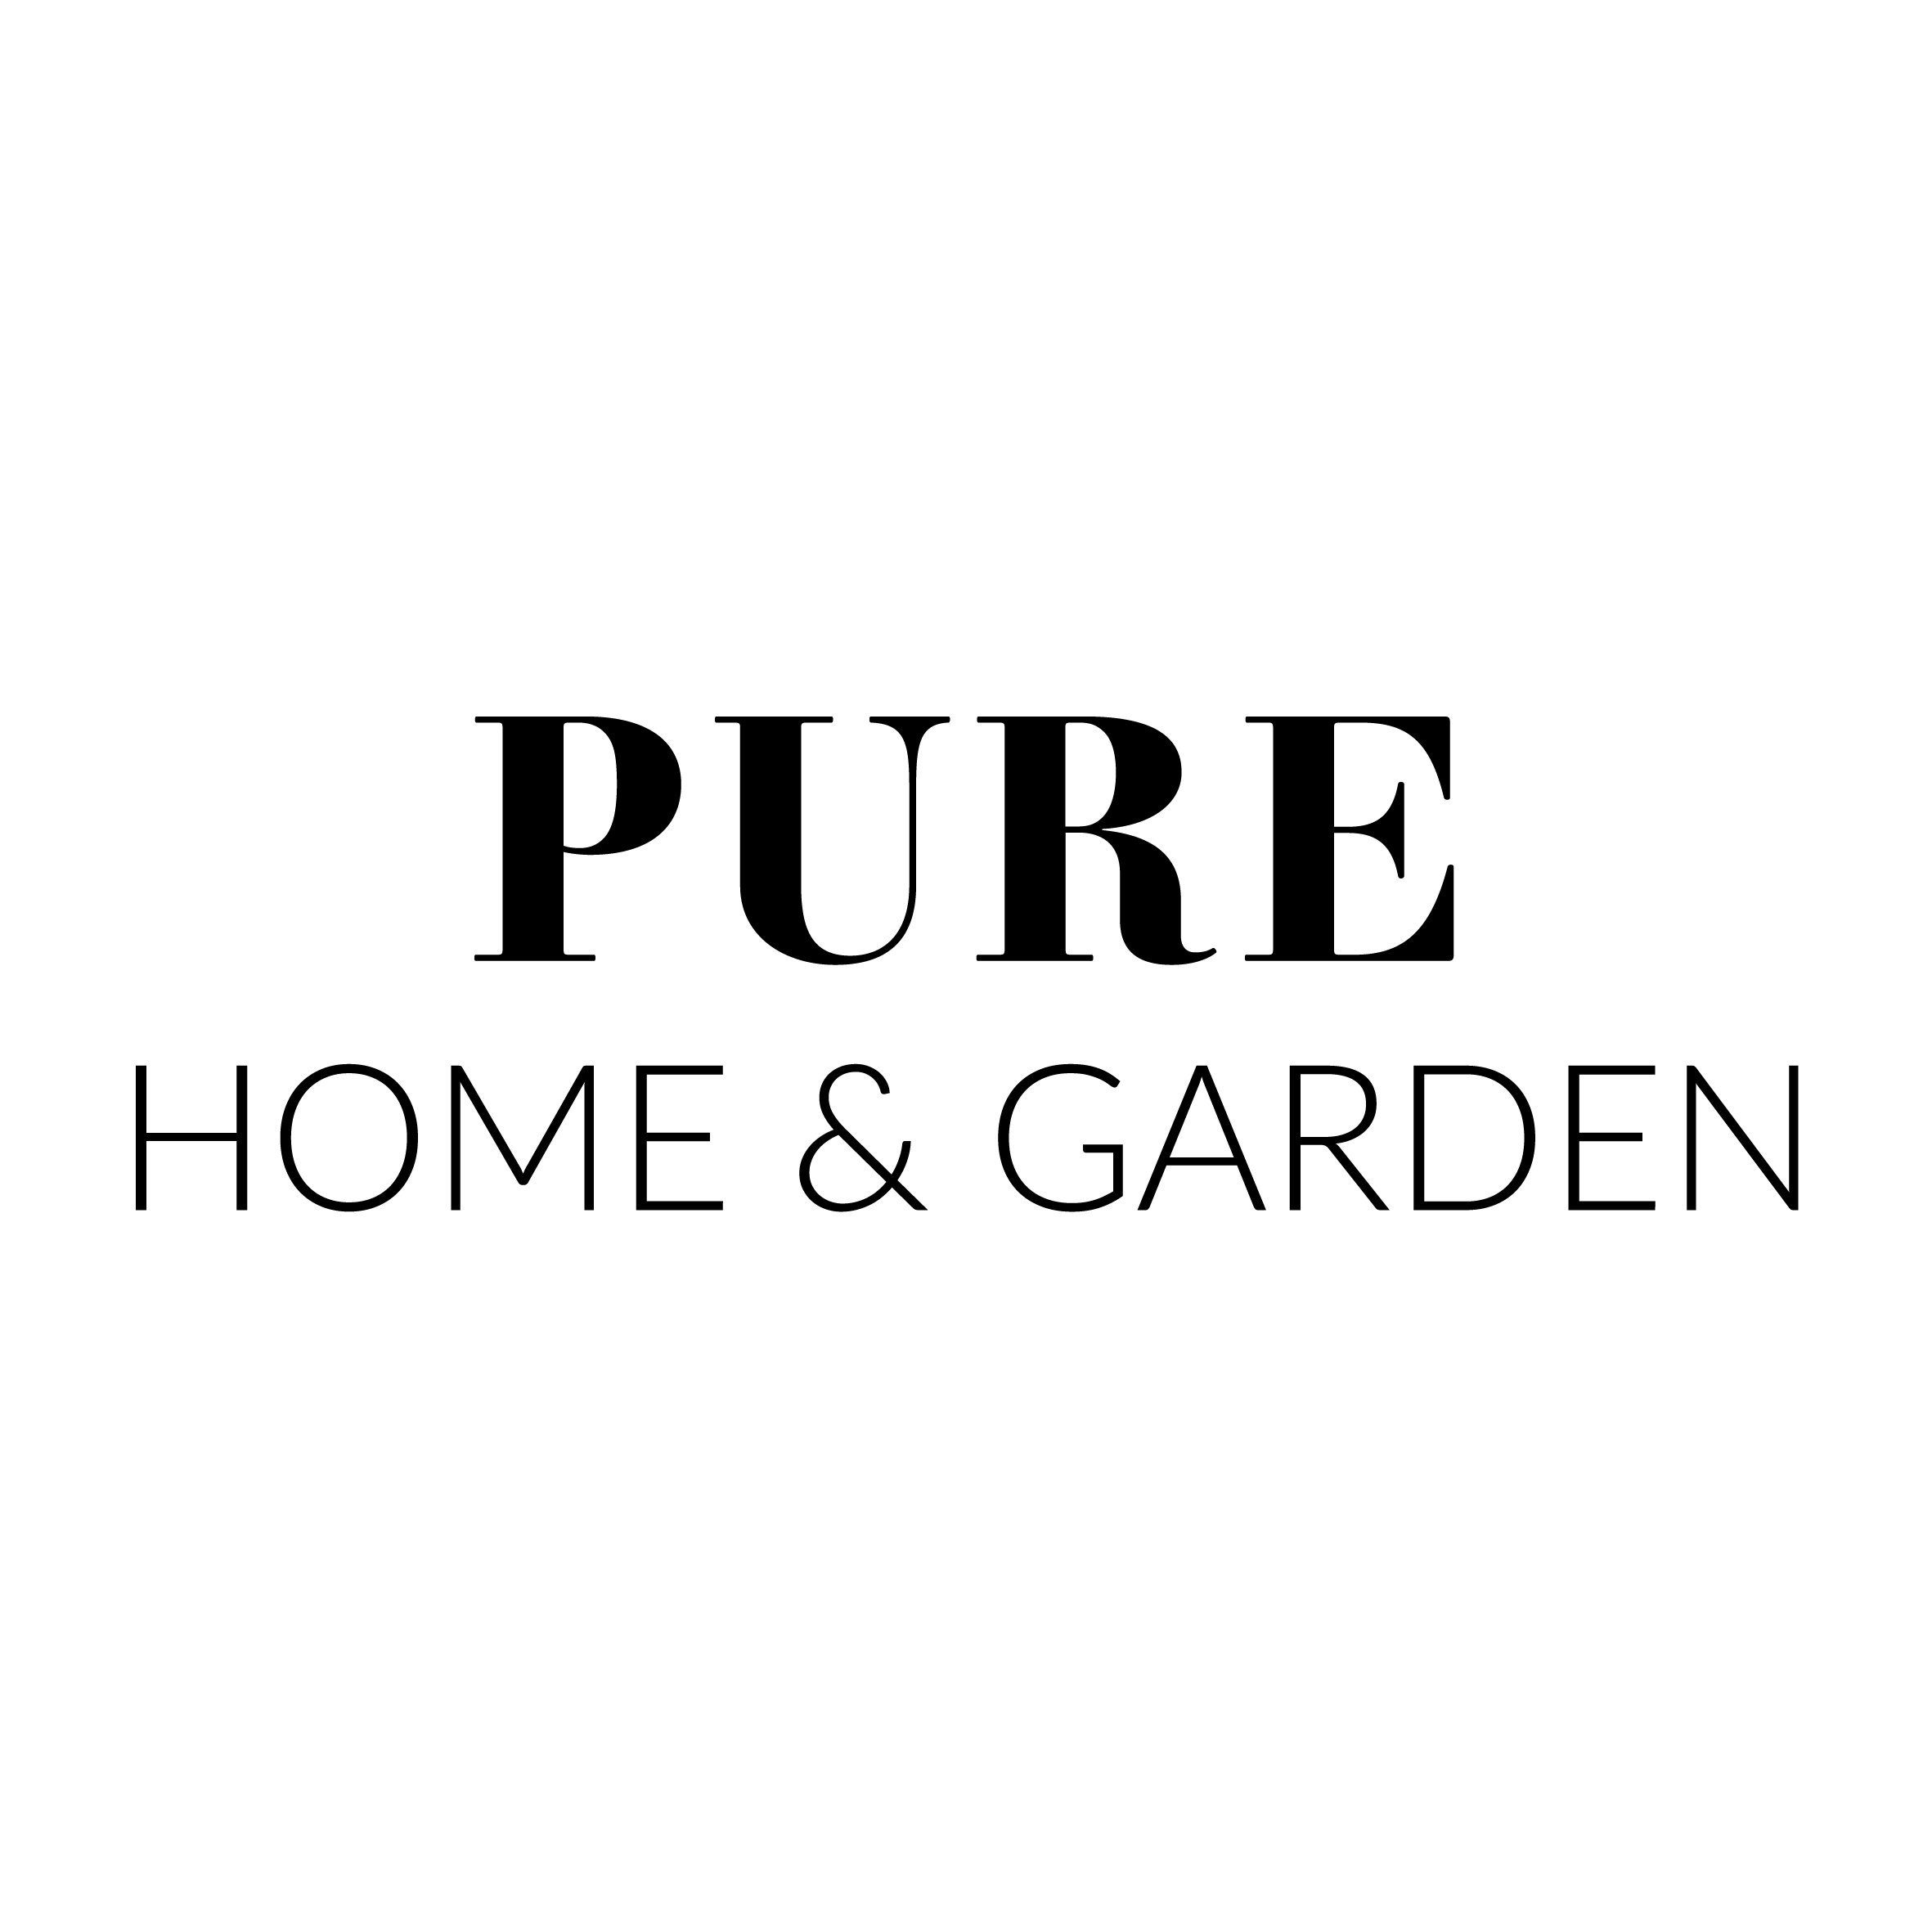 Pure Home & Garden 150x90 Fire Tisch Gartentisch wetterfest silber Nonwood Alu cm